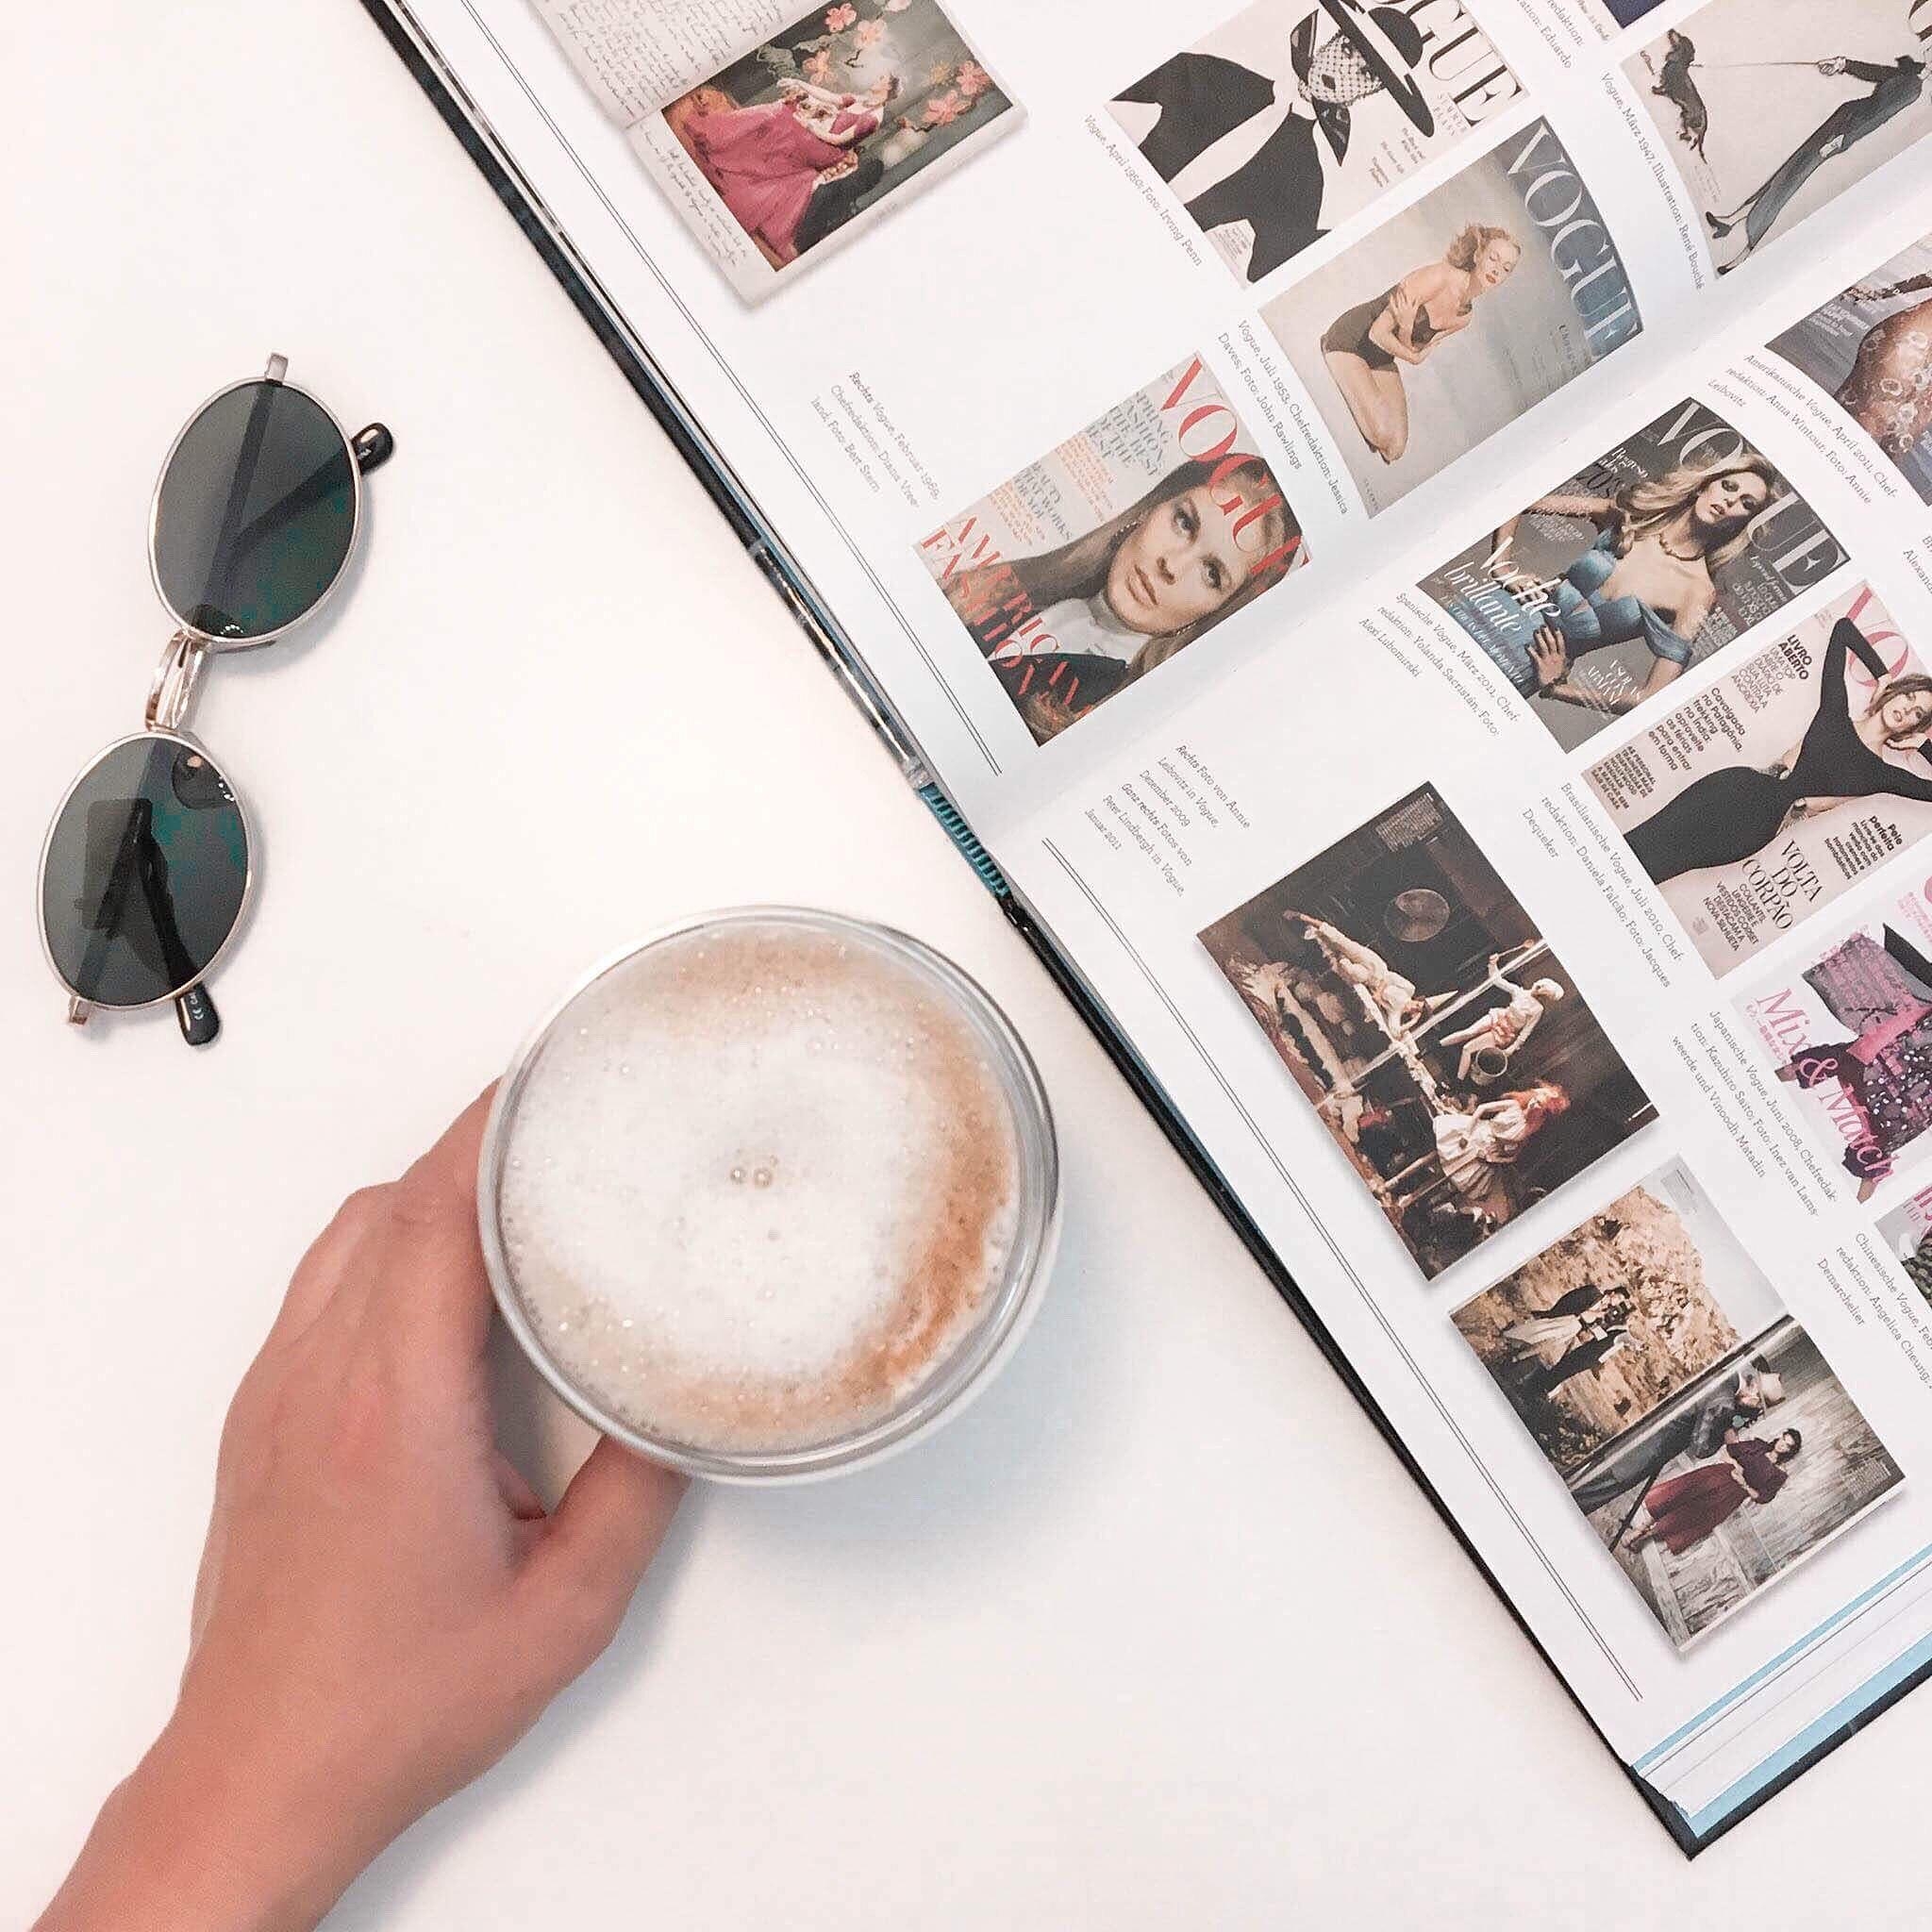 Mhhhh☕️ #coffee #capuccino #coffeetablebooks #fashion #sonnenbrille #vogue #bücher